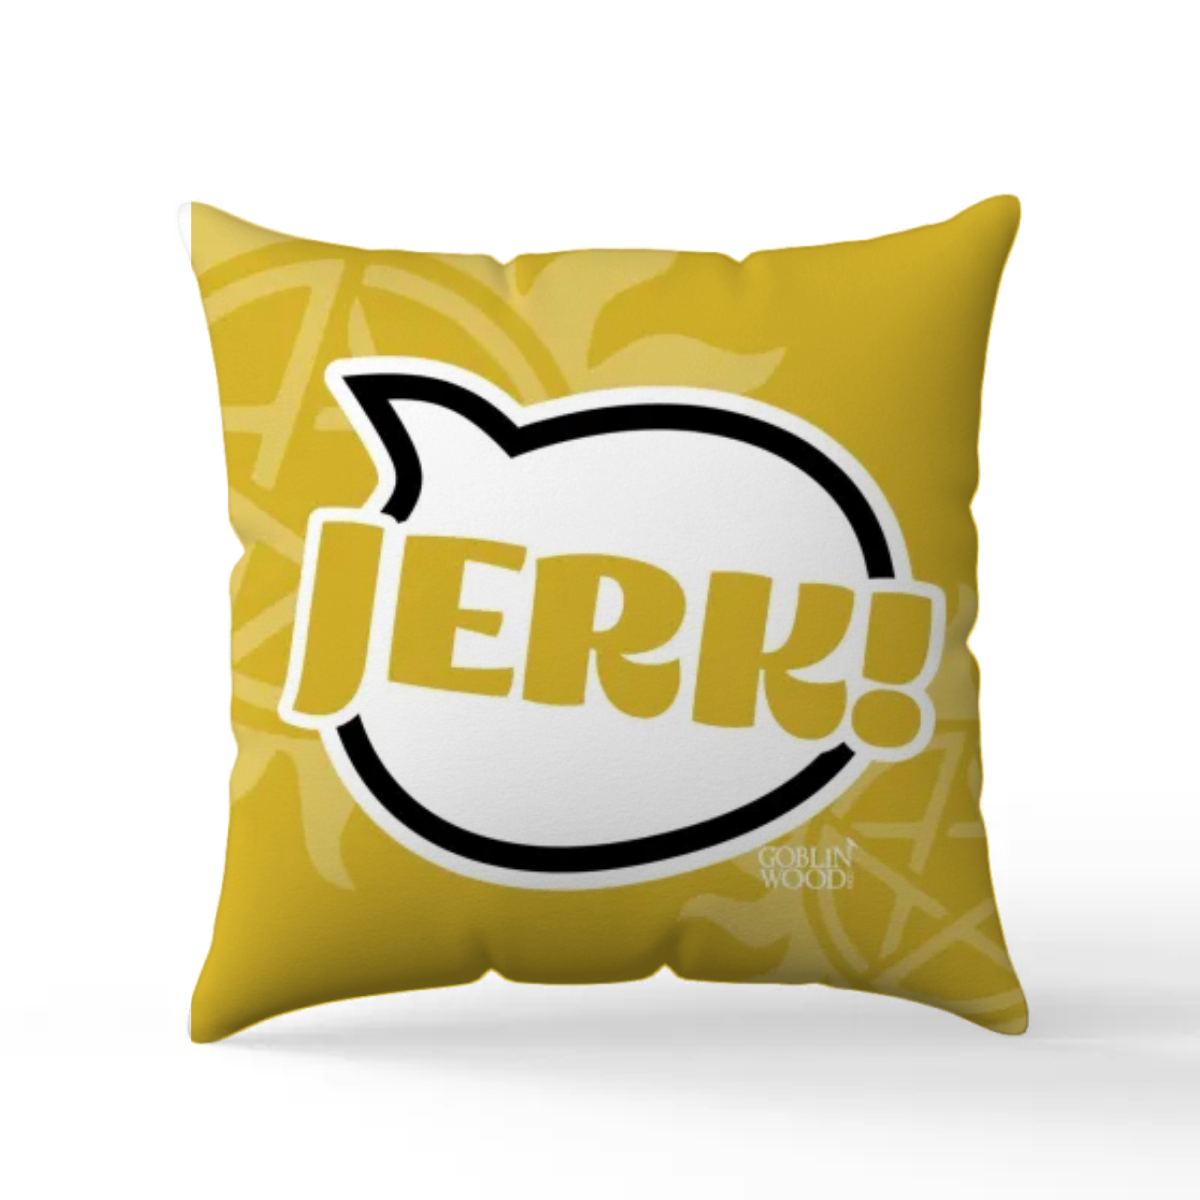 Jerk! Speech Bubble Scatter Cushion - Supernatural Inspired - Goblin Wood Exclusive